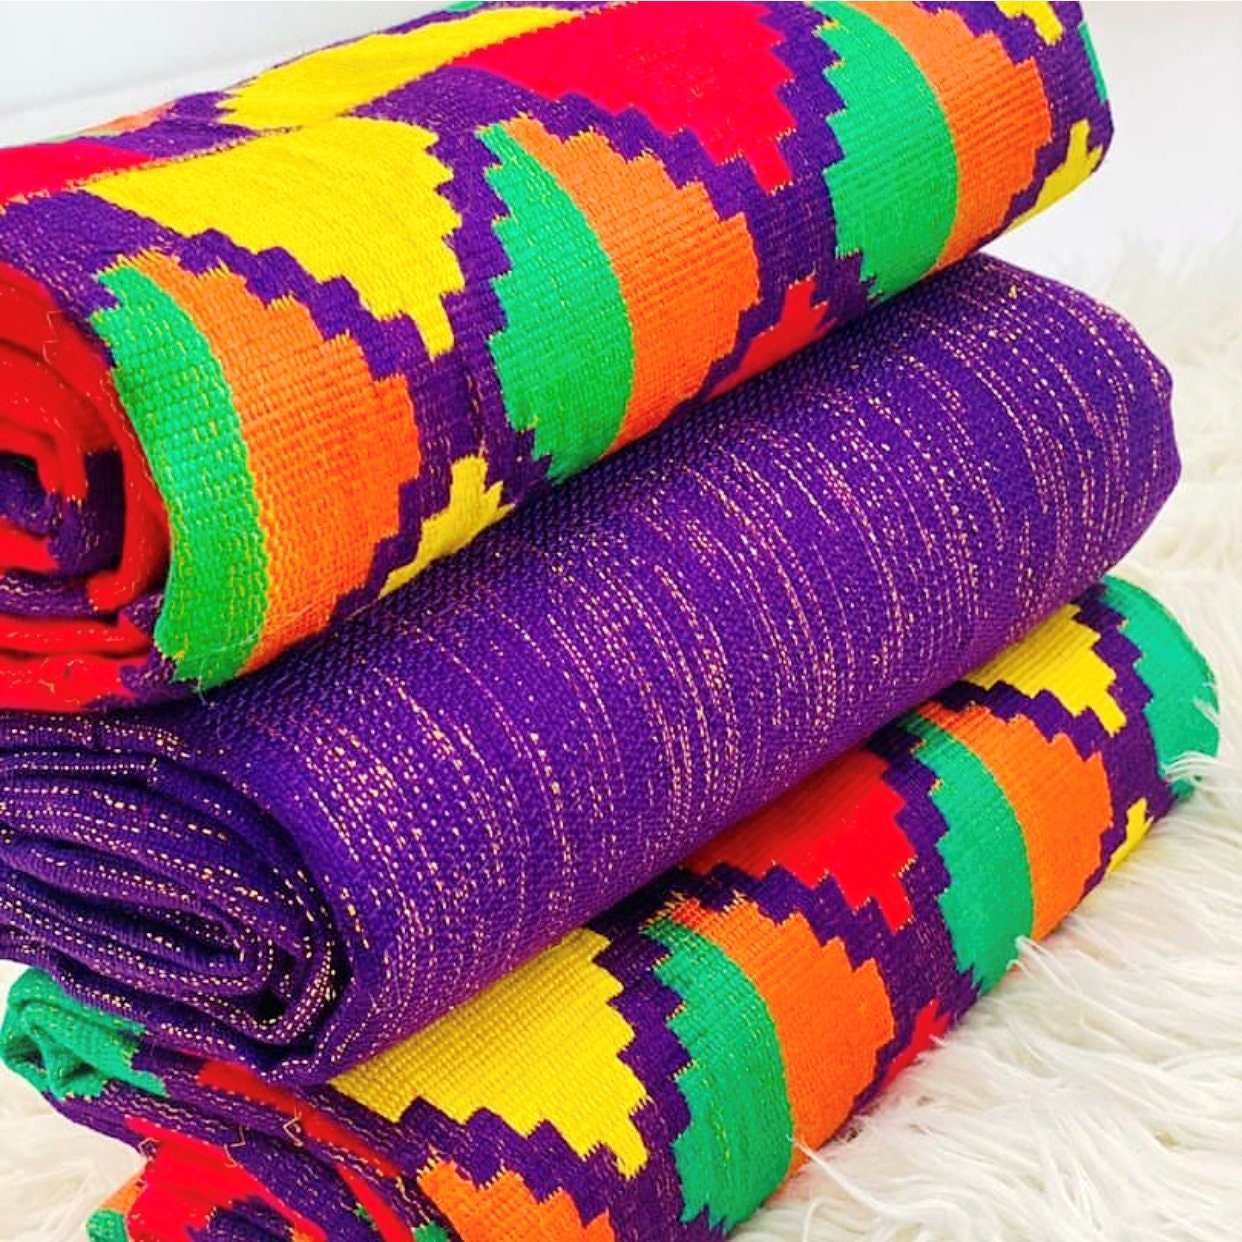 Authentic Kente 6 yards Genuine Ghana handwoven Kente fabric and Kente  Cloth Bonwire Kente African fabric African Ghana Kente Traditional